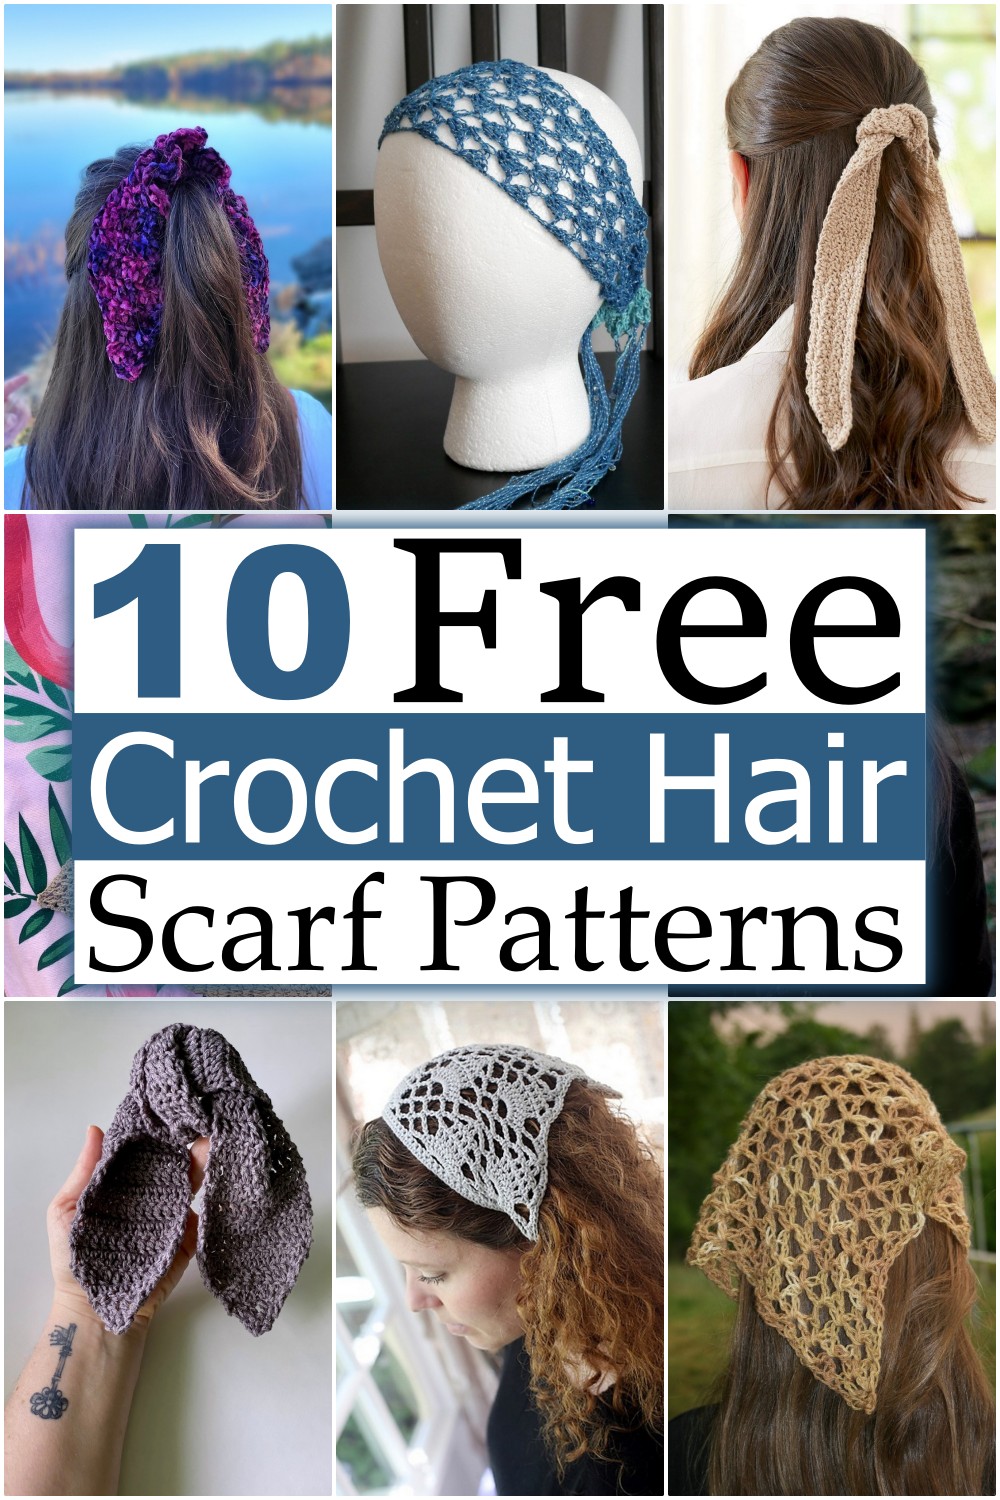 Crochet Hair Scarf Patterns